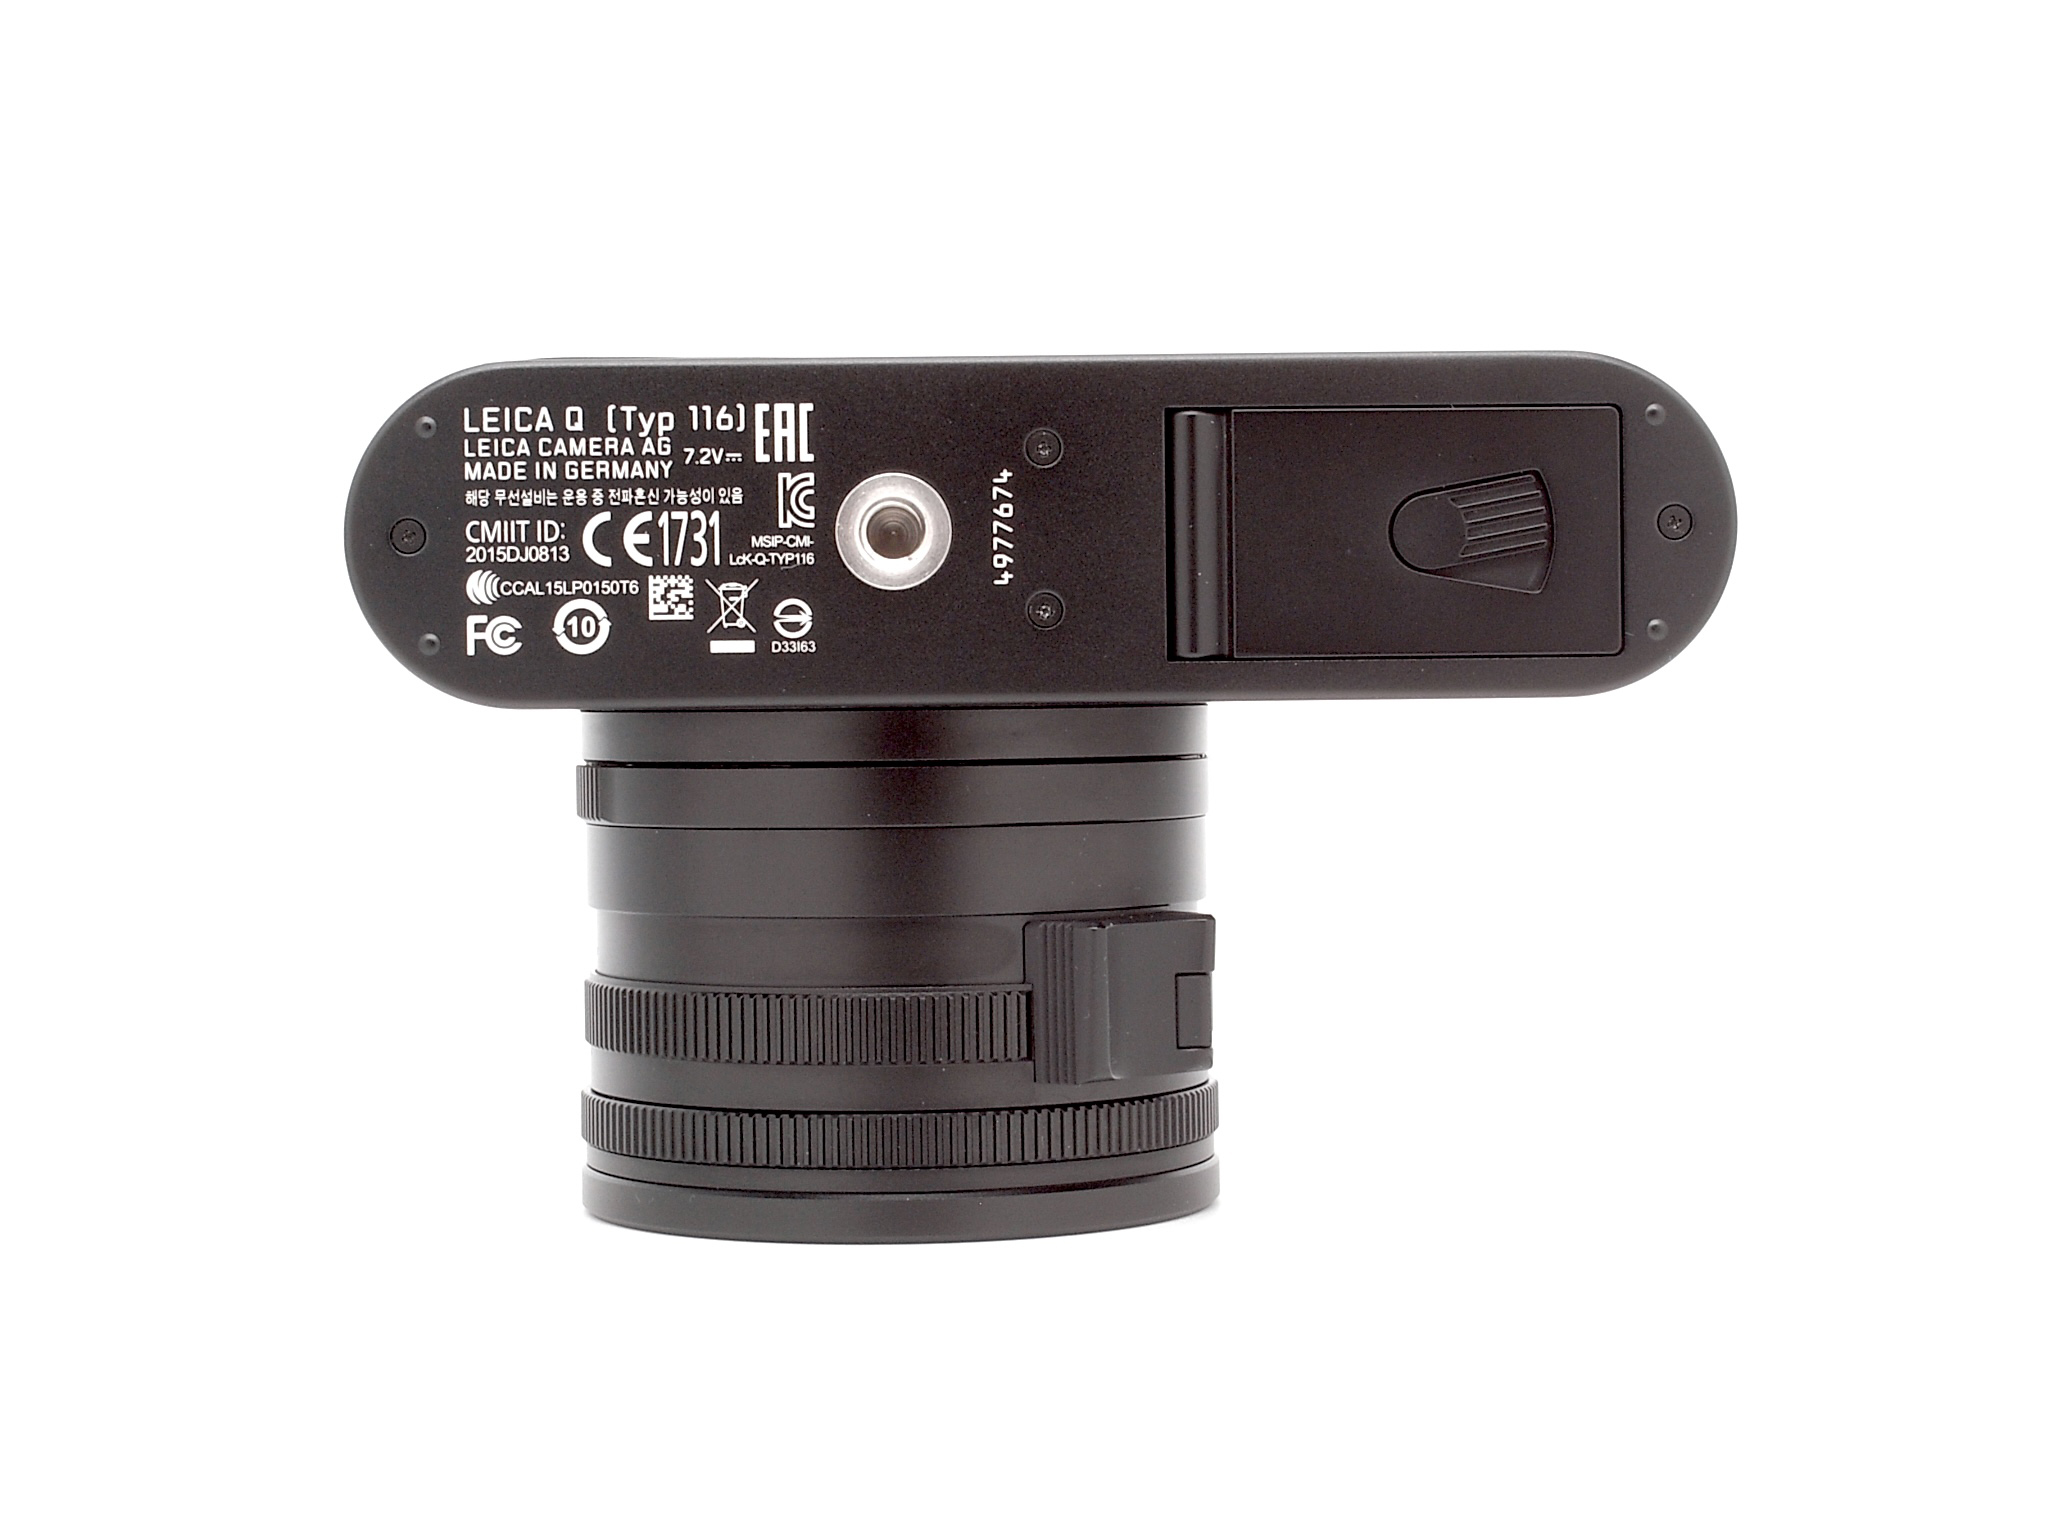 Leica Q (Typ 116) black